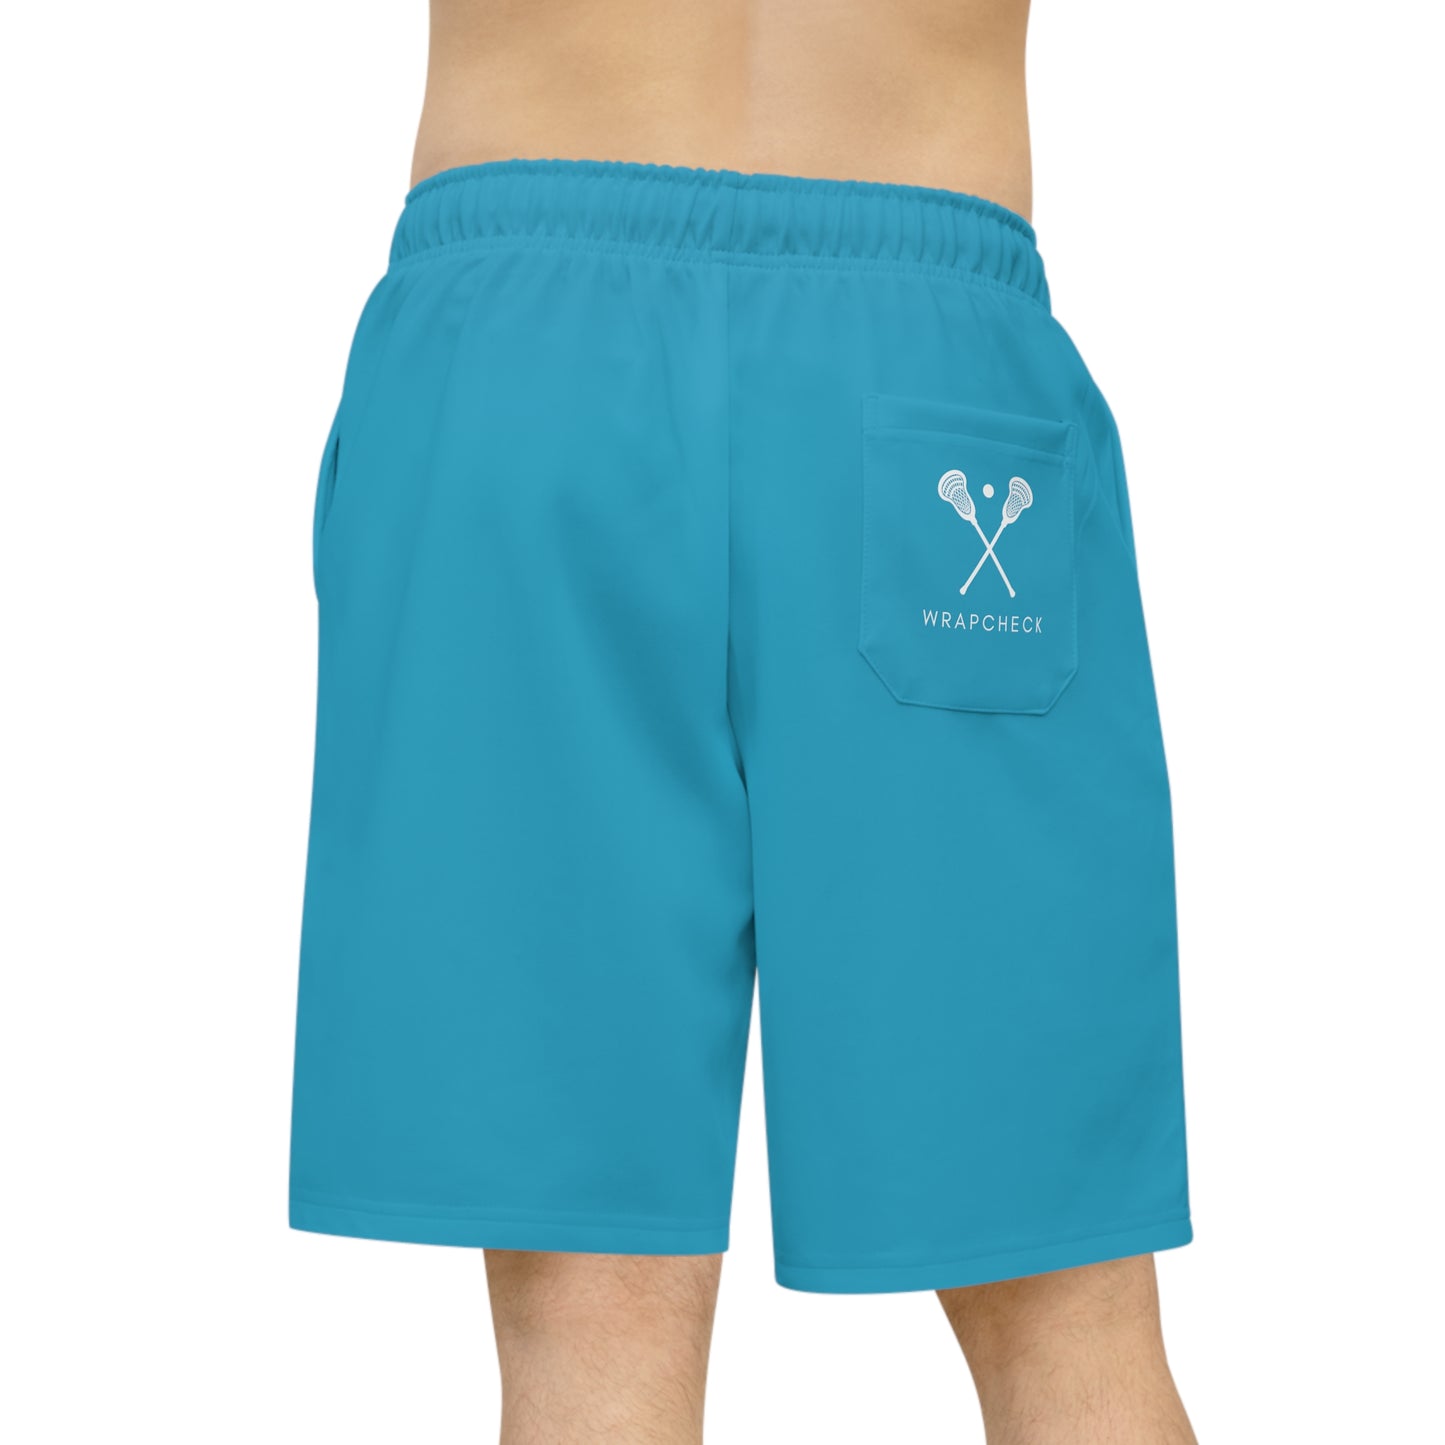 WrapCheck Sports Men's Turquoise Athletic Shorts